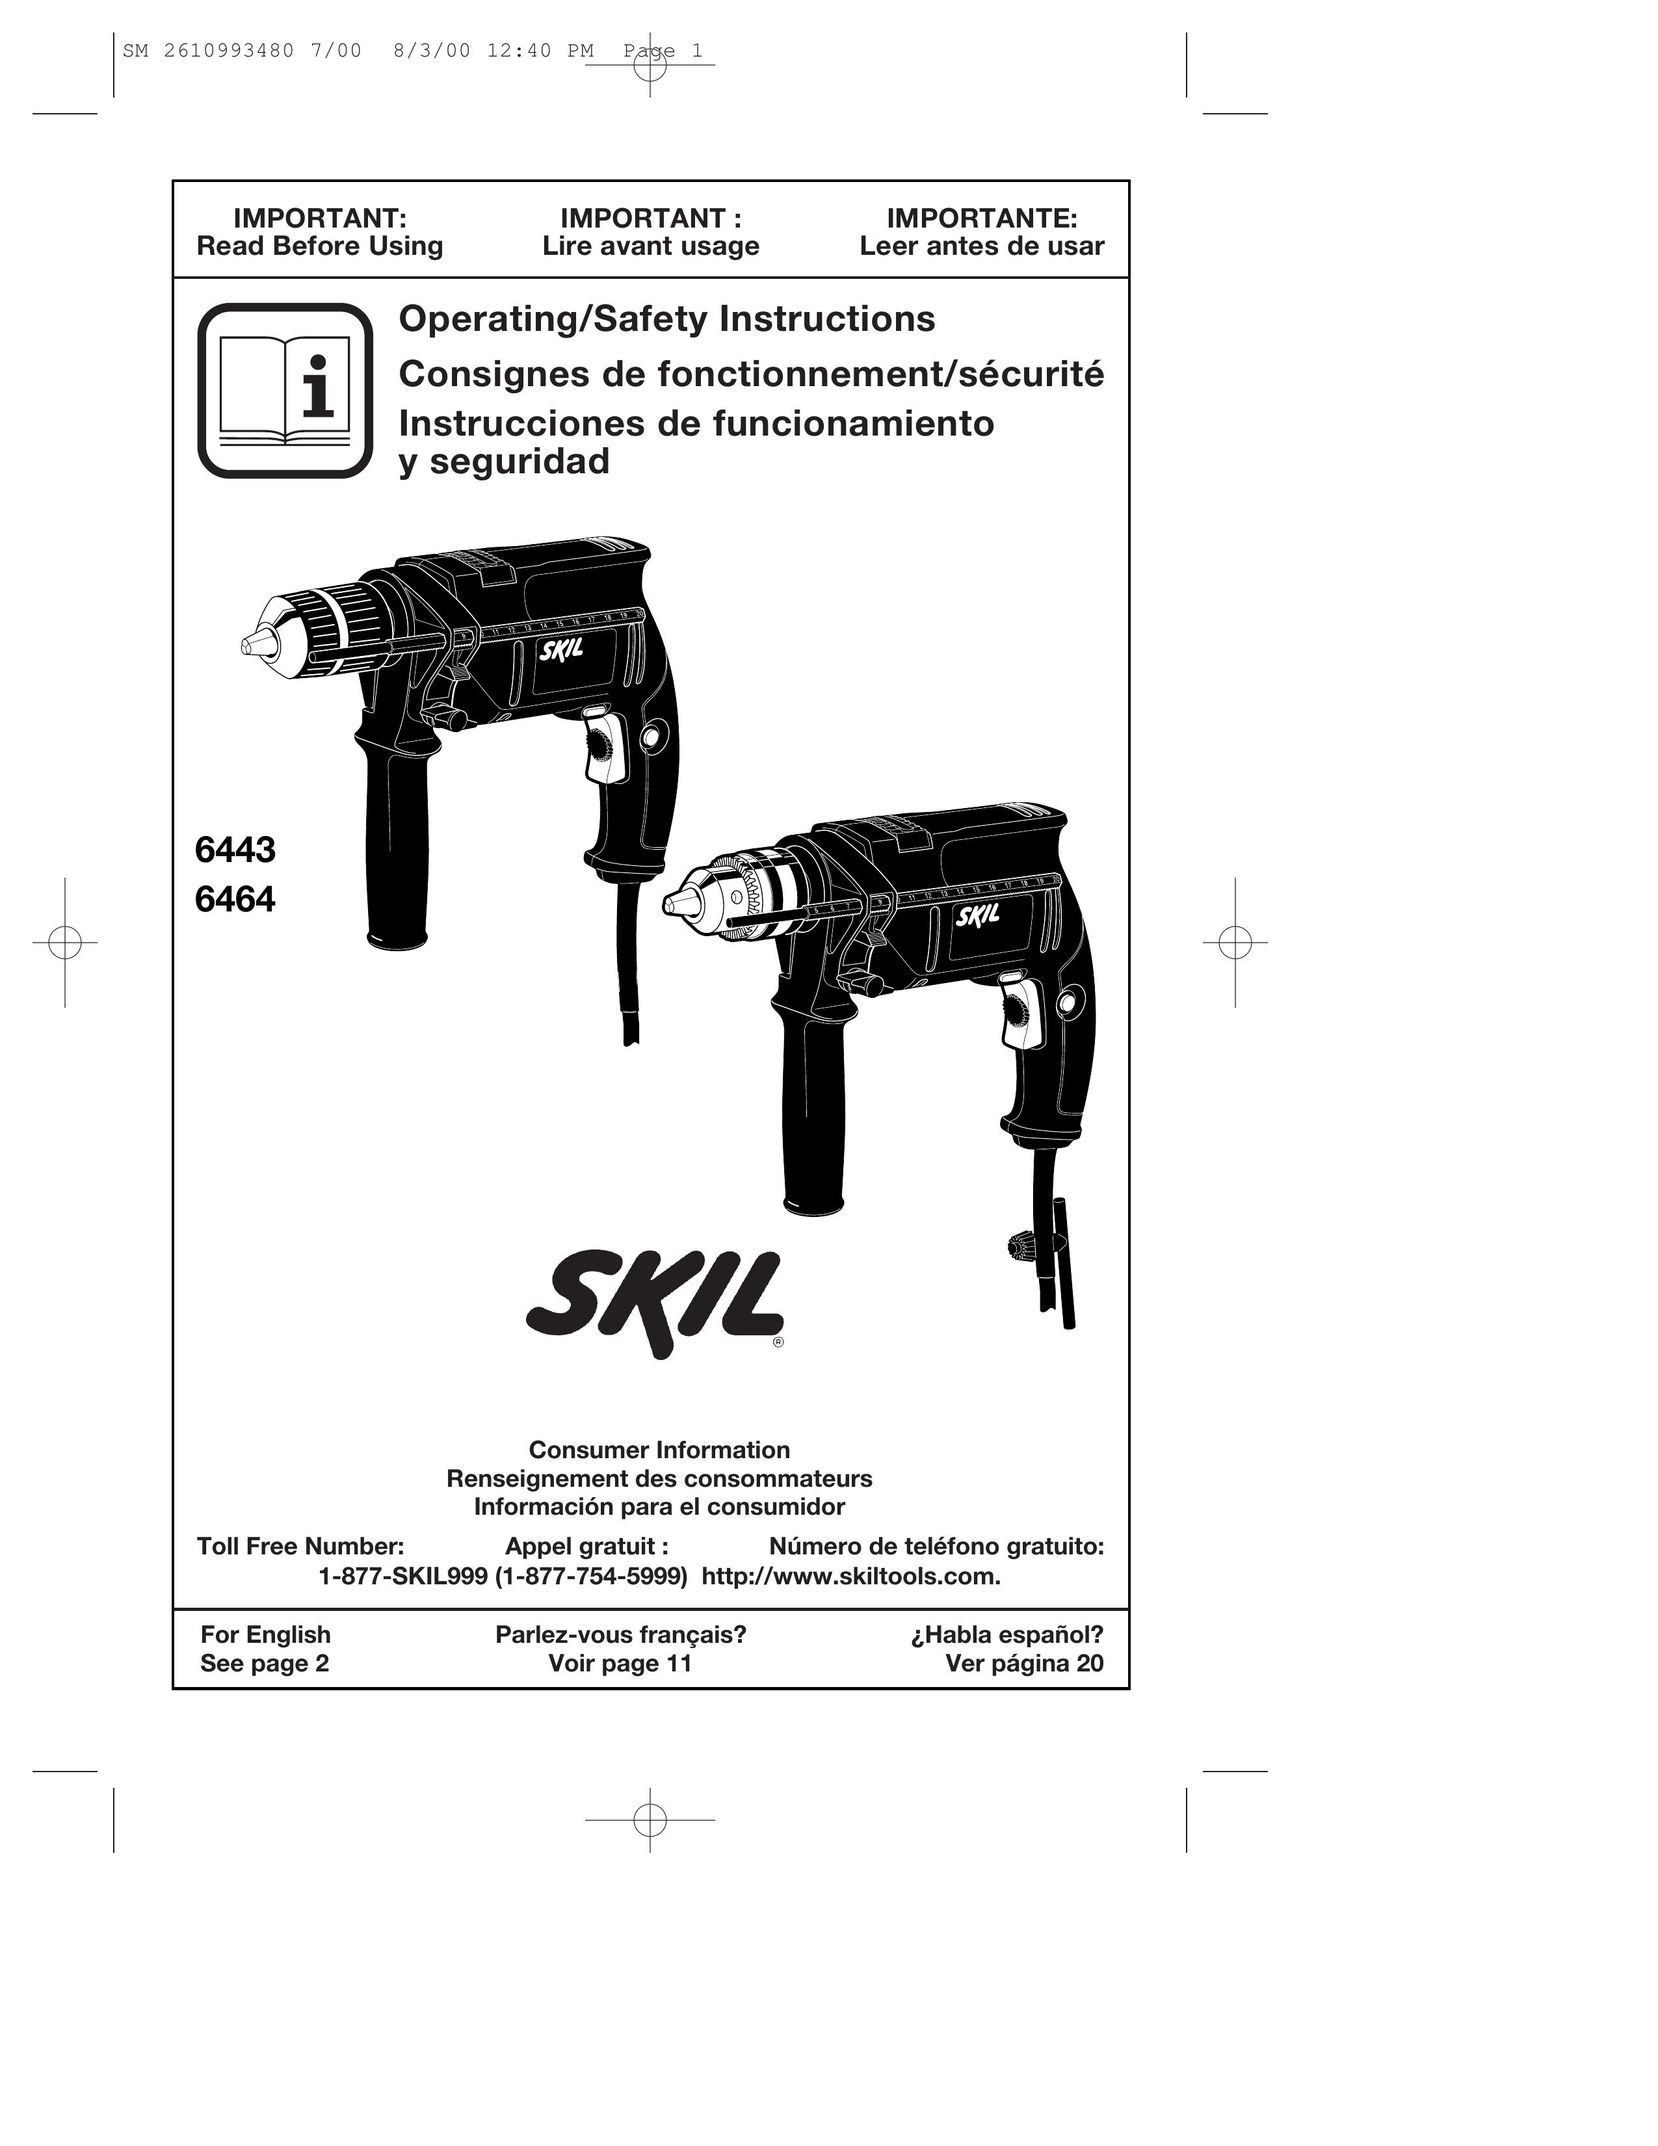 Skil 6443 Drill User Manual